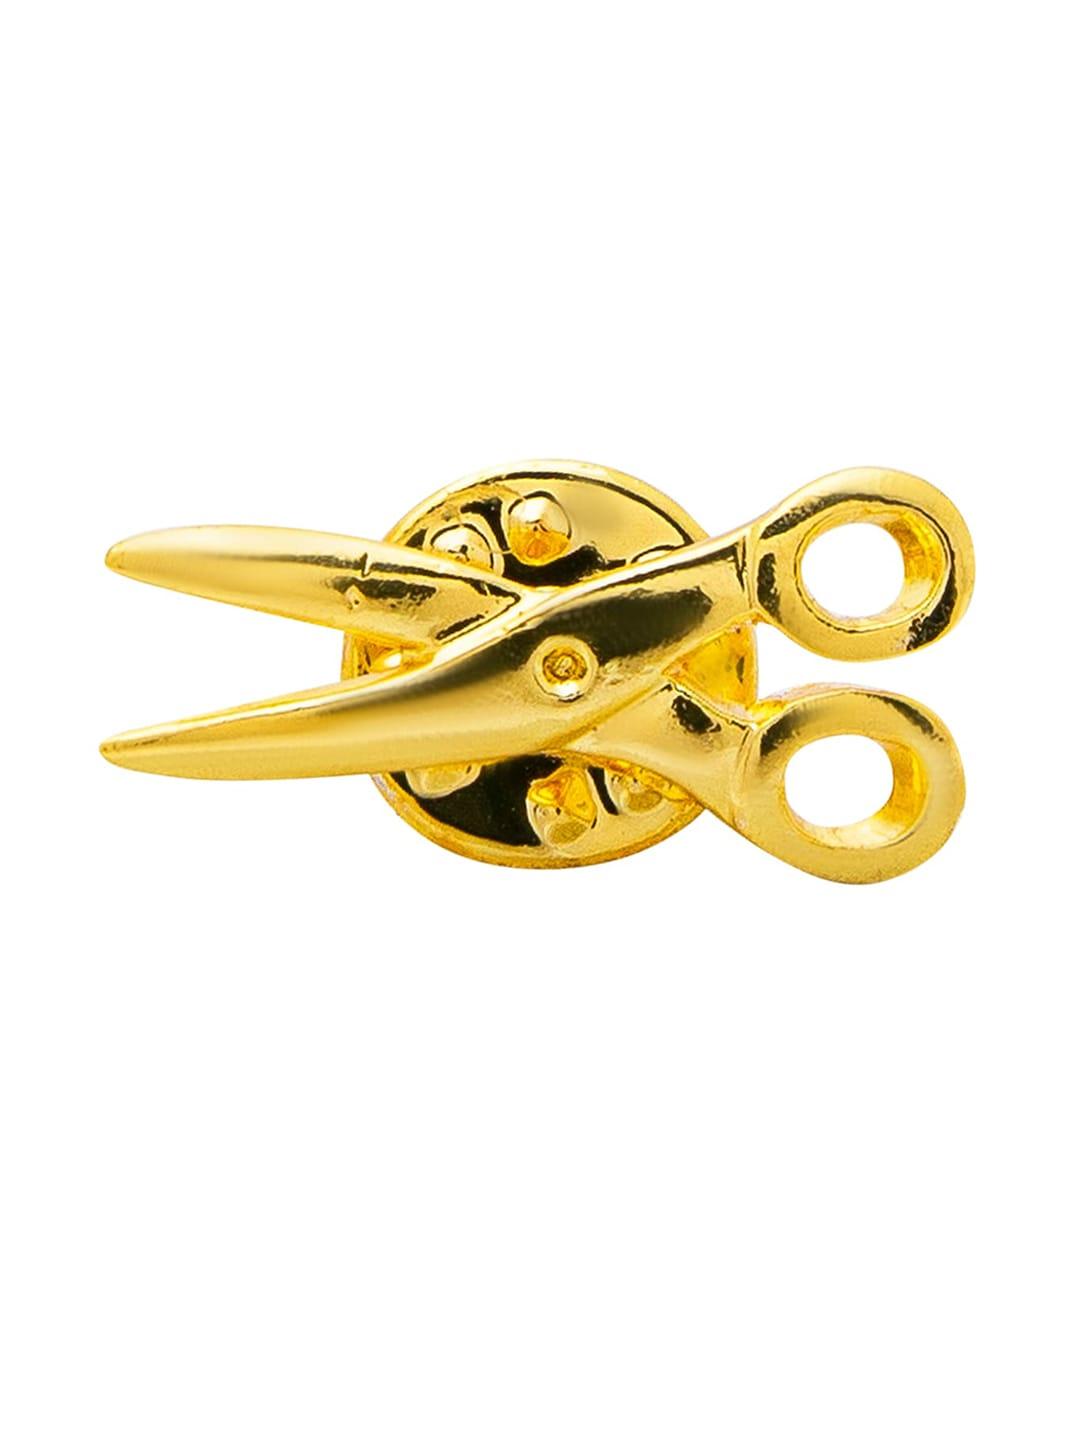 shining jewel - by shivansh men gold-plated scissor design brooch